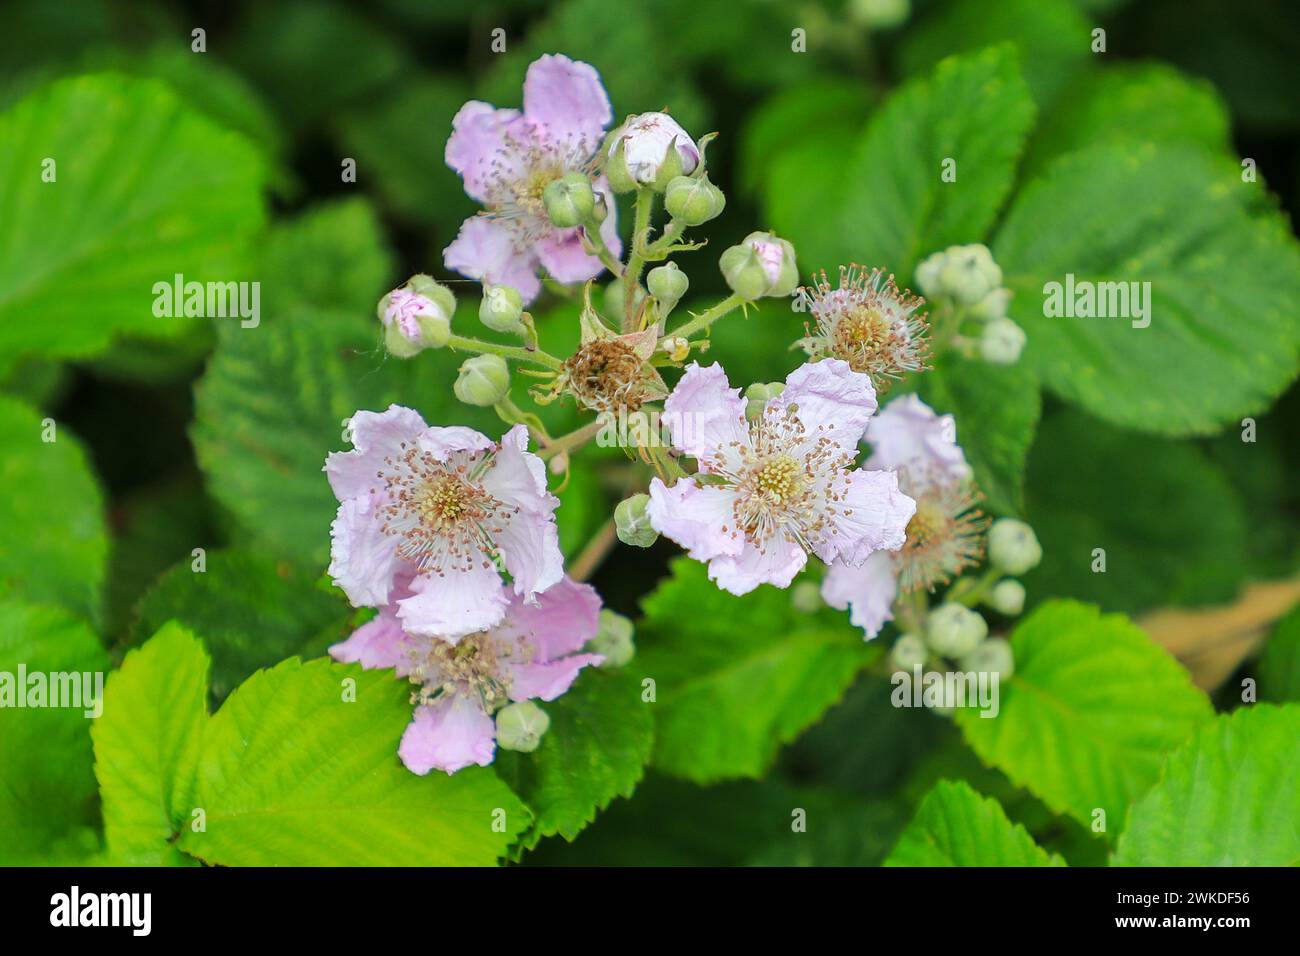 The pink flowers of a wild Bramble (Rubus fruticosus) or Blackberry plant, England, UK Stock Photo